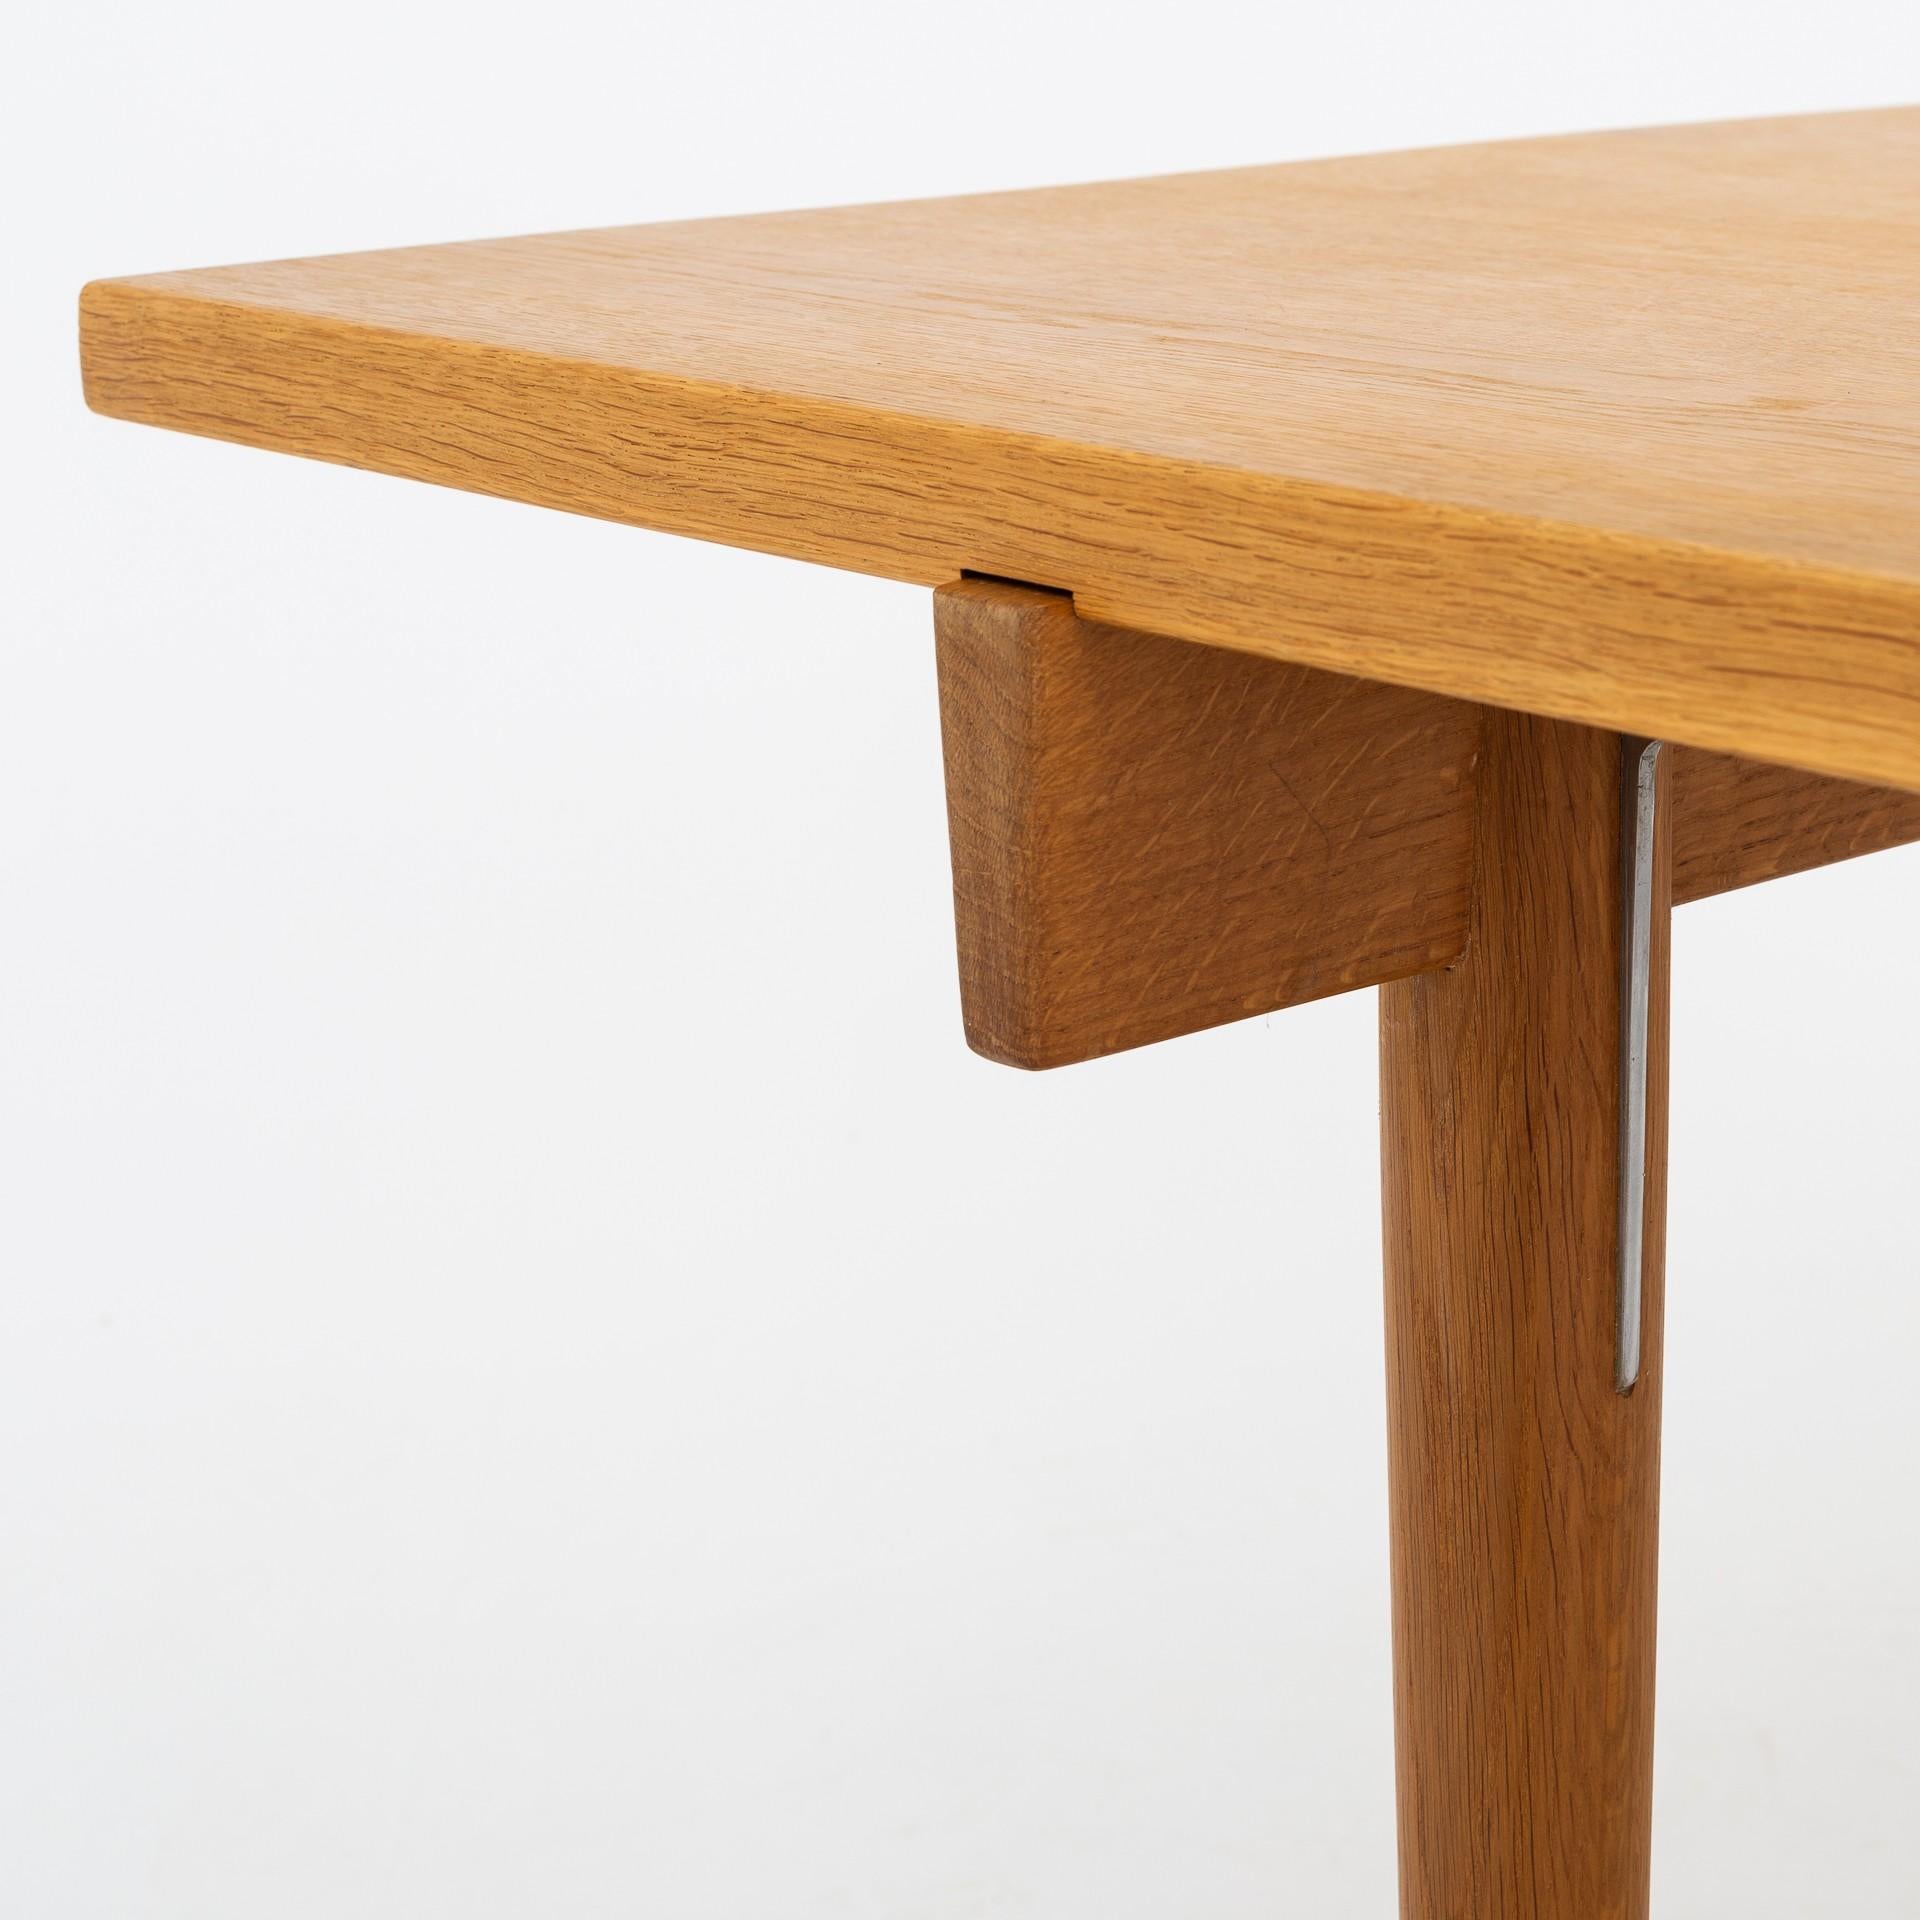 Dining table/work desk in oak and steel. Maker Johannes Hansen.